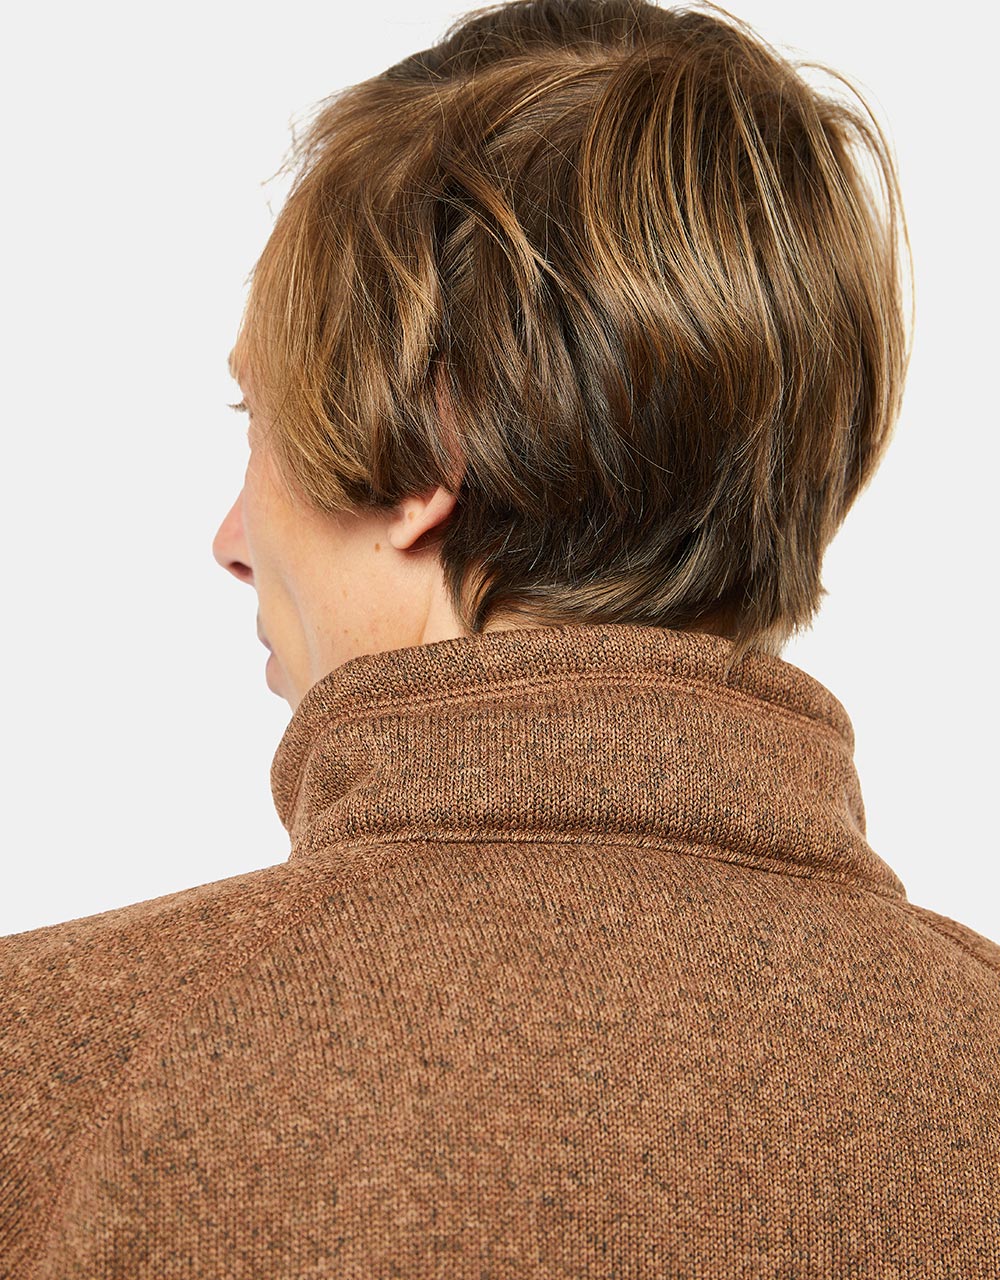 Patagonia Better Sweater® 1/4 Zip - Moose Brown